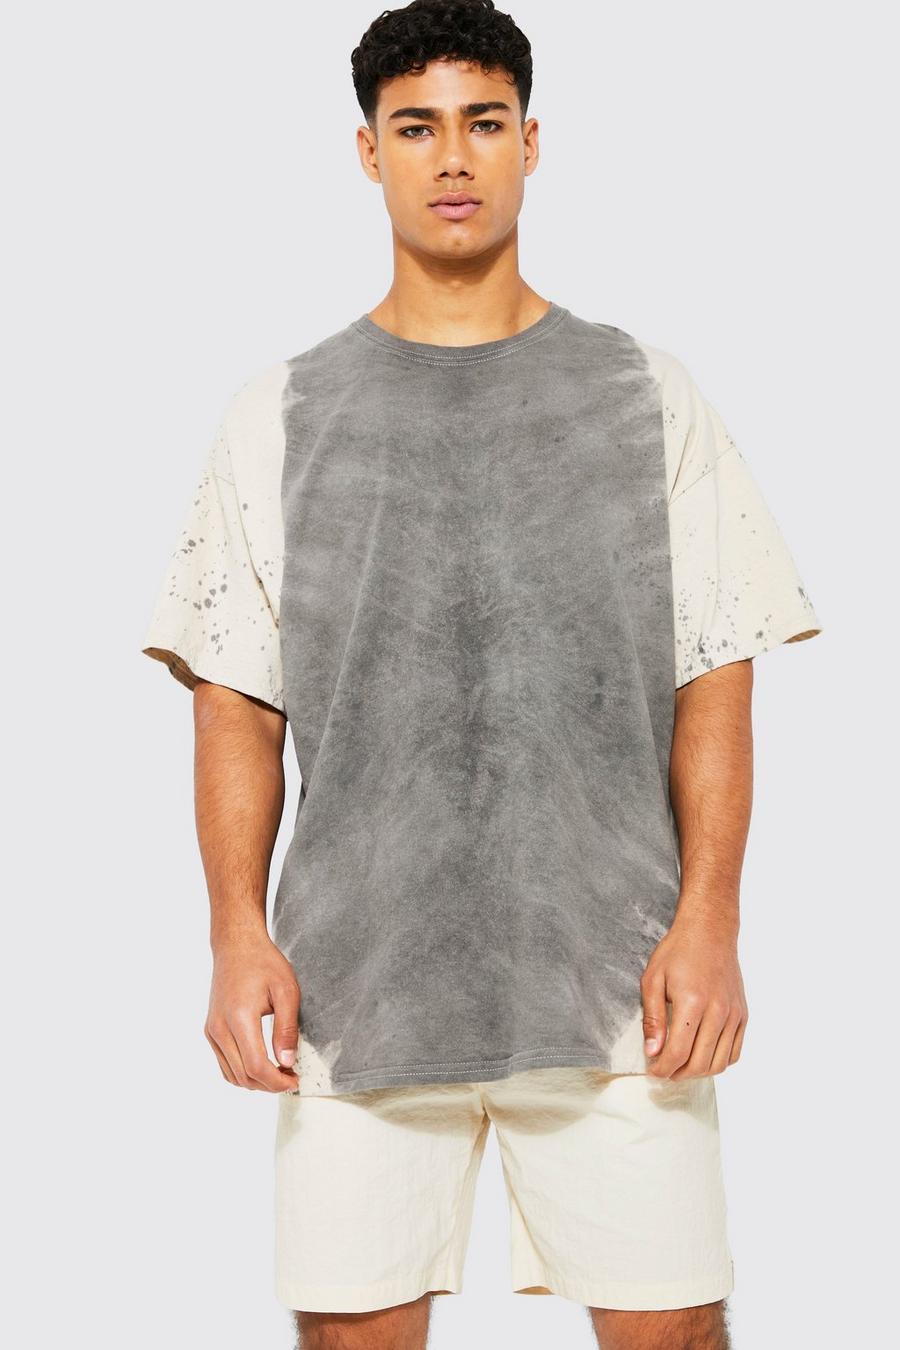 Charcoal grey Oversized Bleach Tie Dye T-shirt